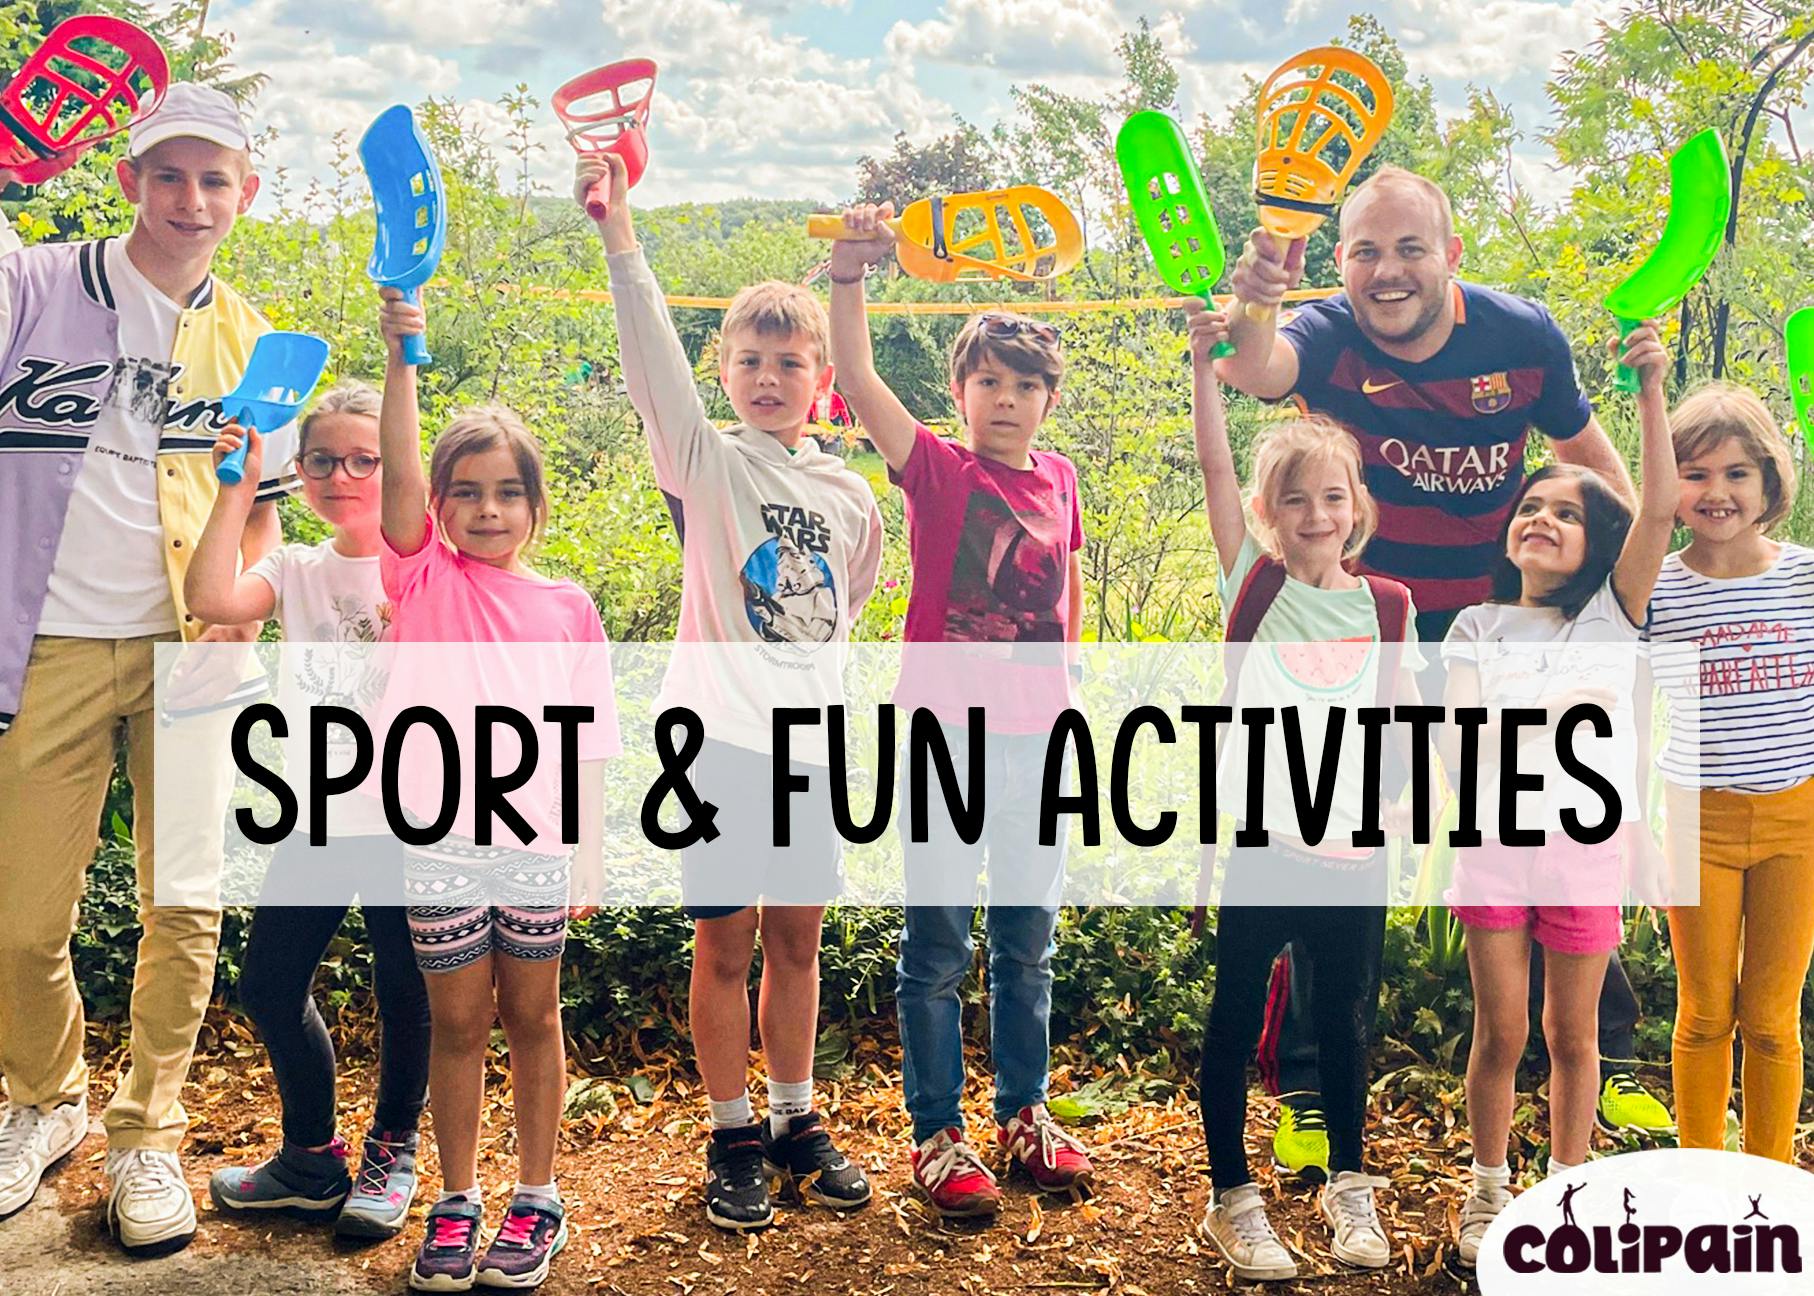 PM - Sports & fun activities